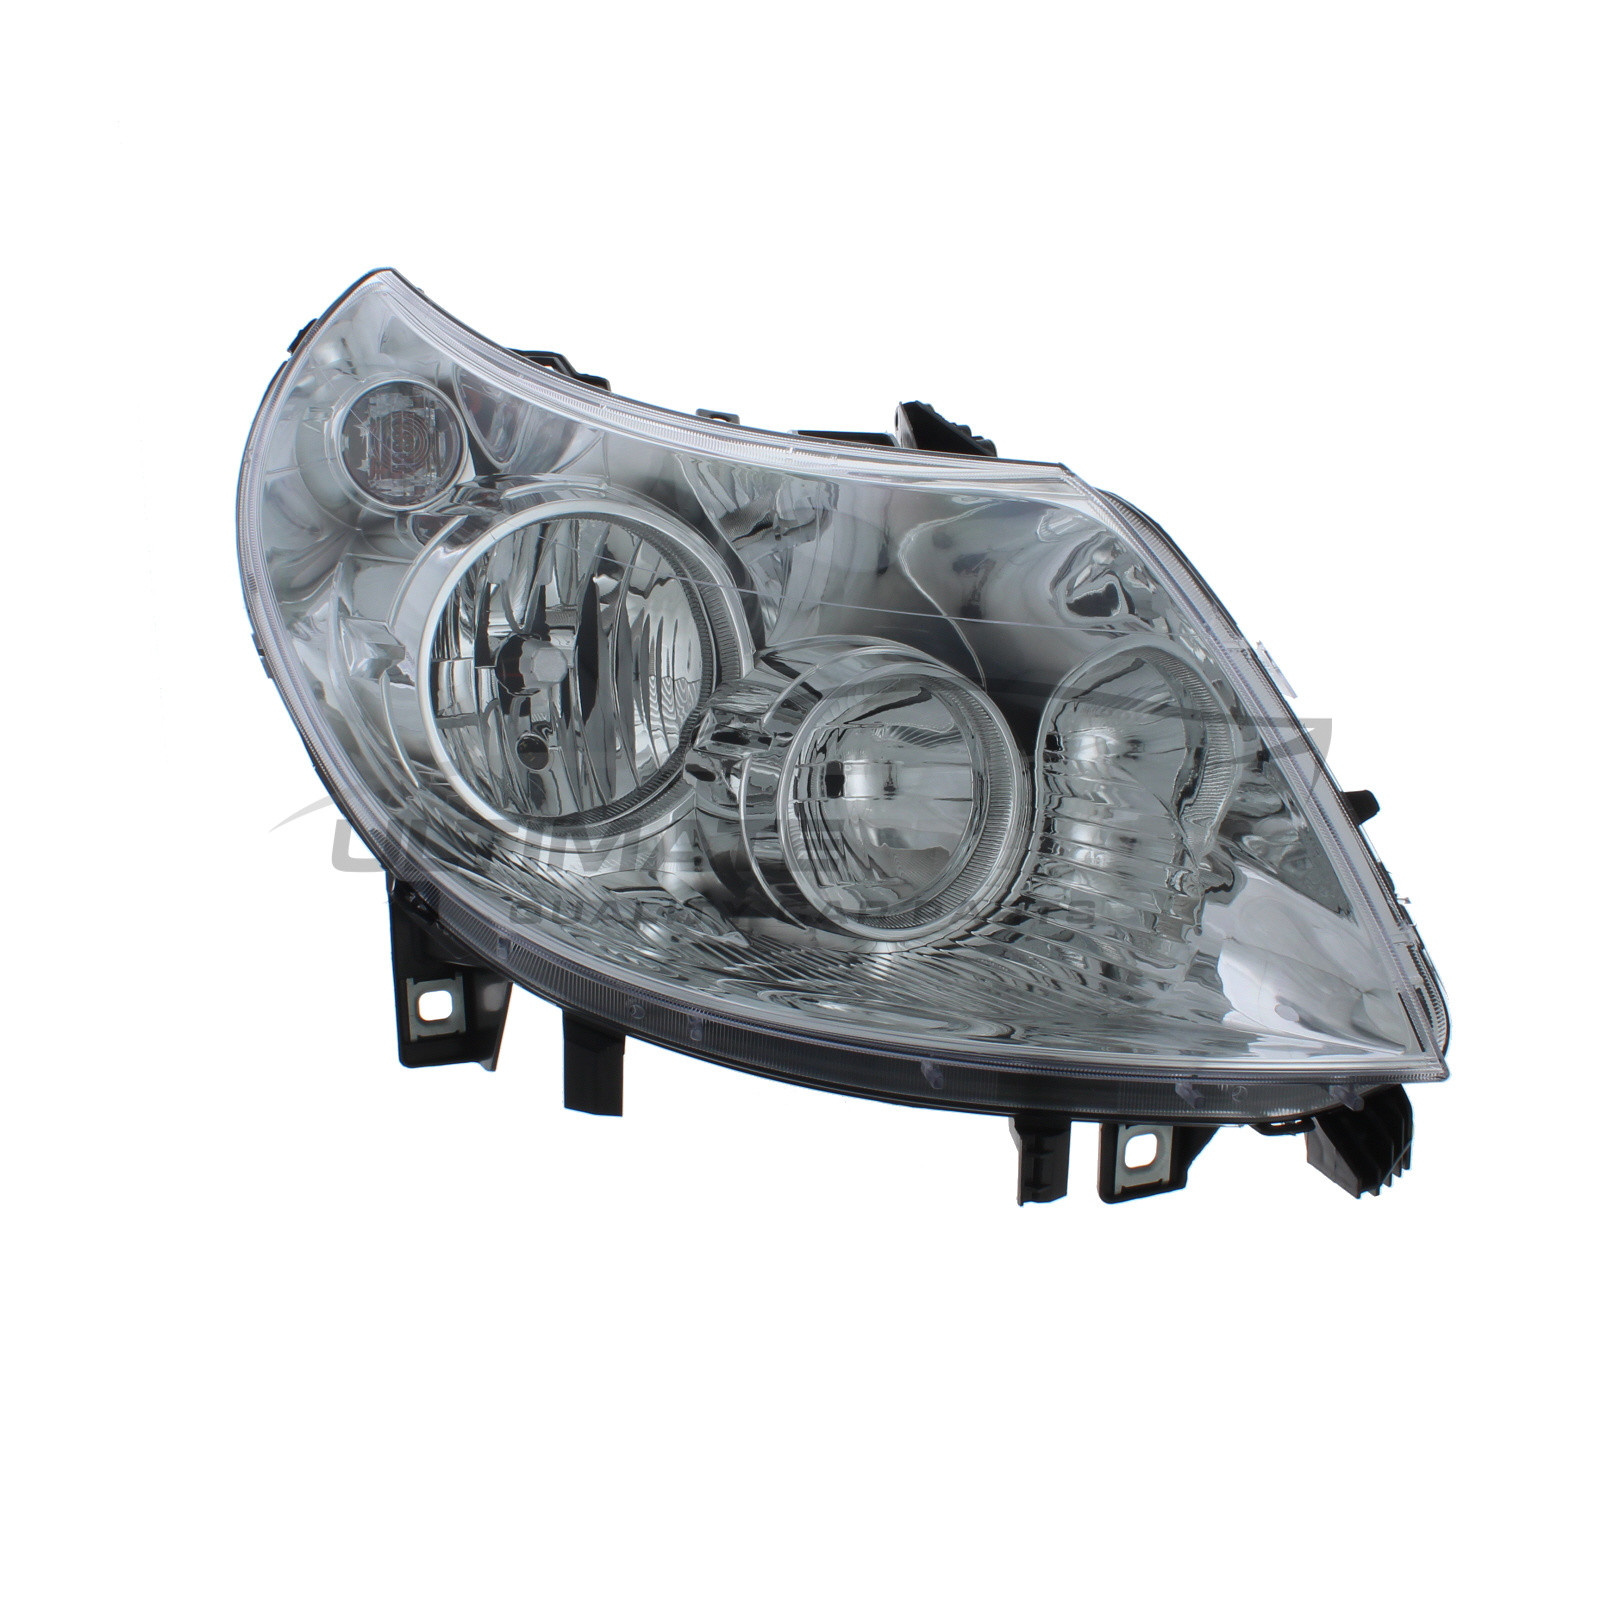 Headlight / Headlamp for Citroen Relay